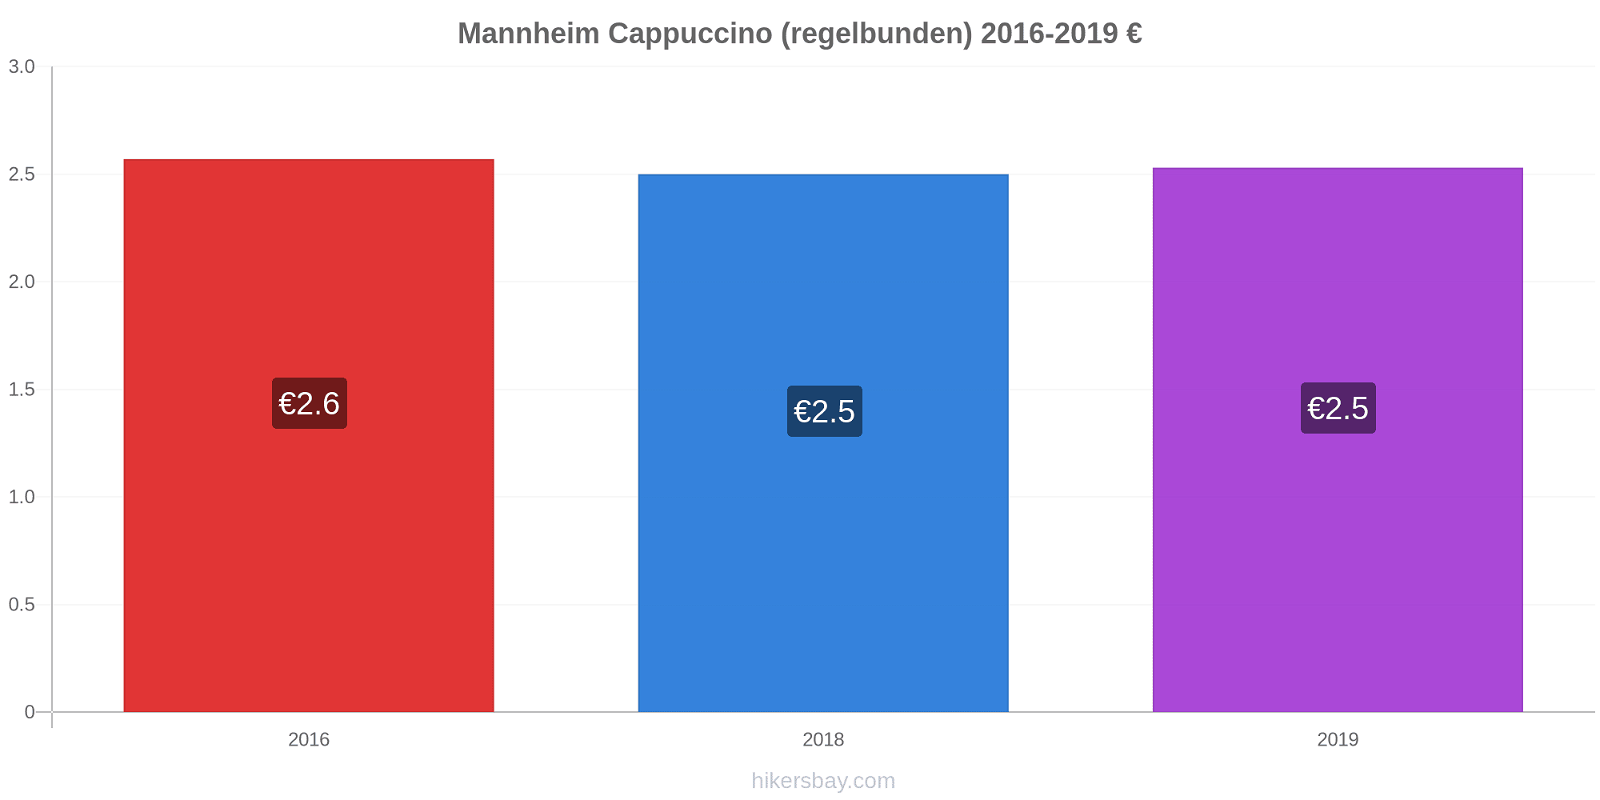 Mannheim prisförändringar Cappuccino (regelbunden) hikersbay.com